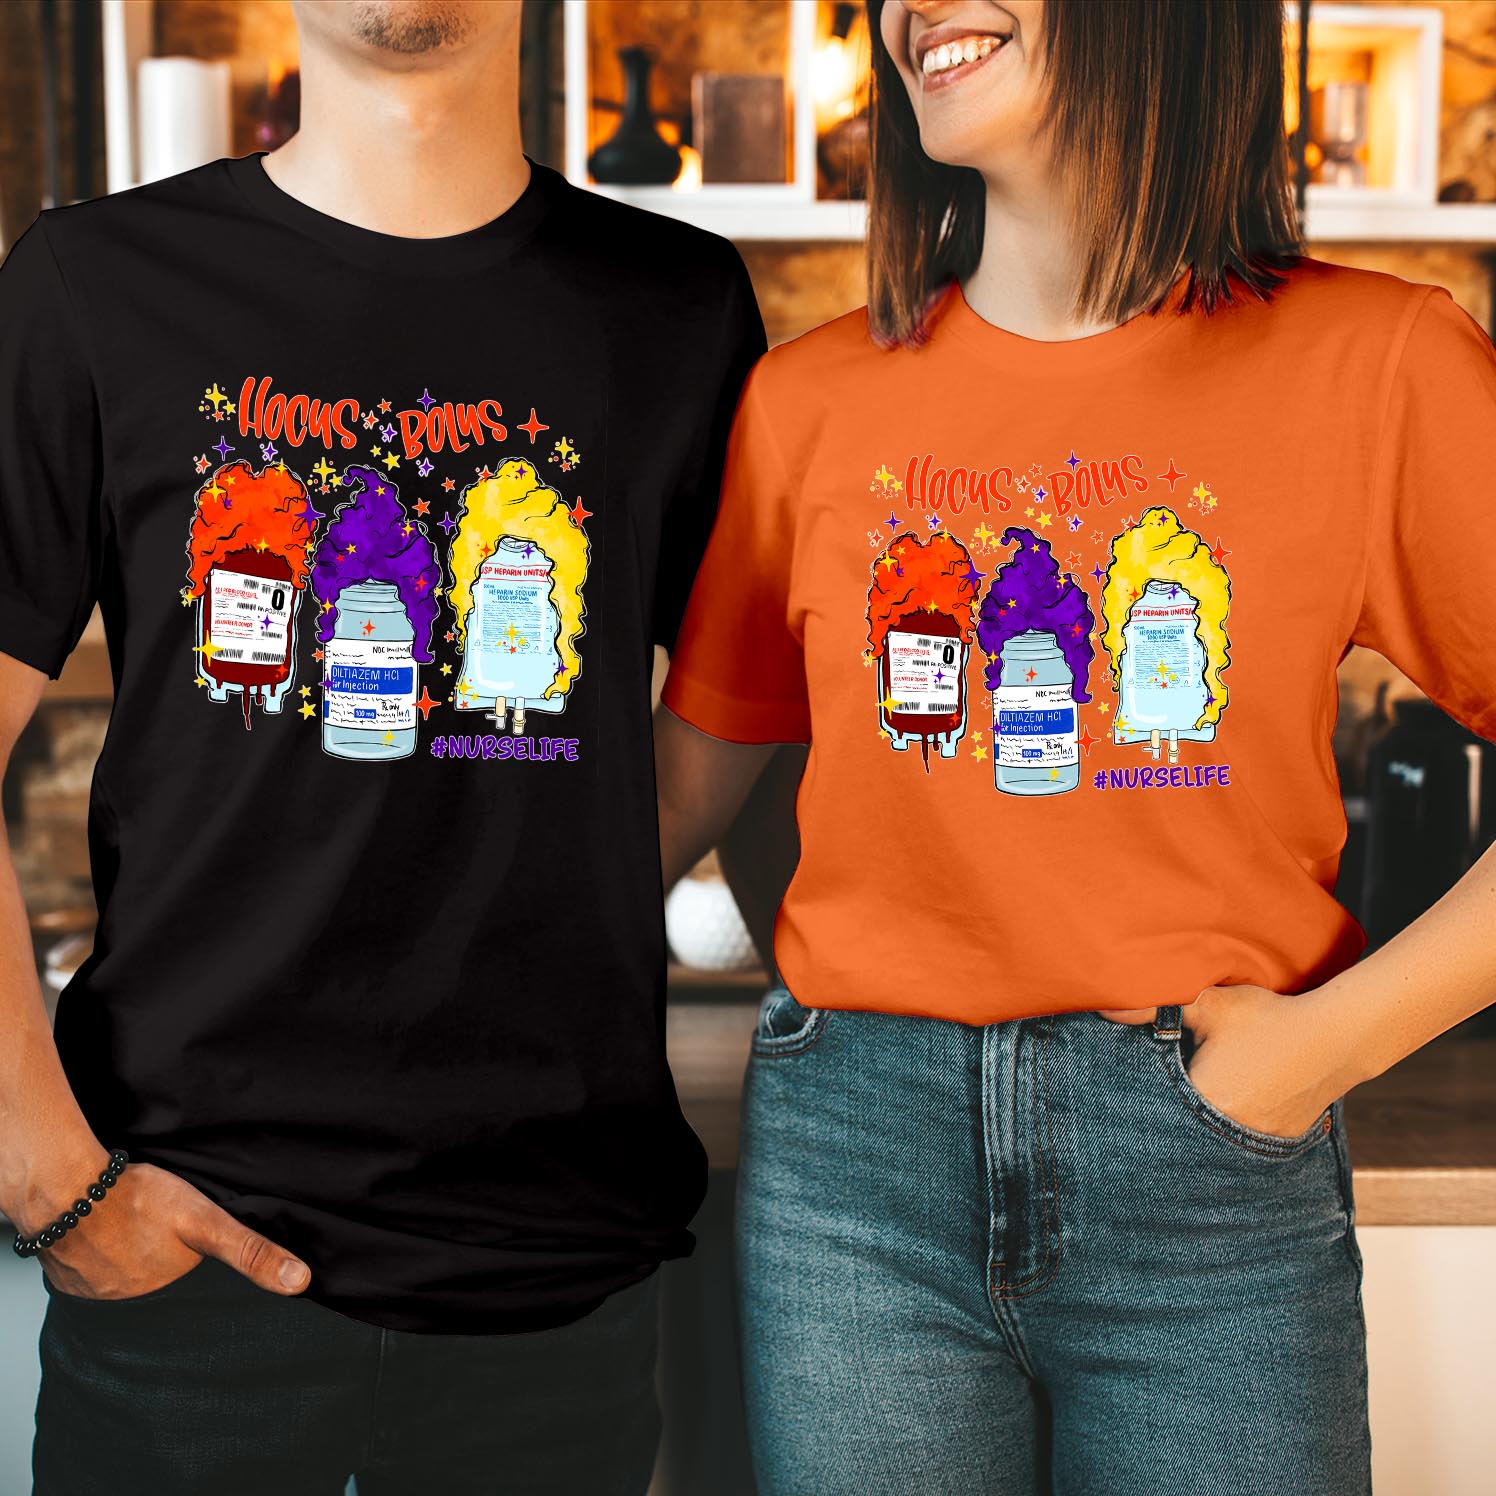 Hocus Bolus Nurse Life T-Shirt Perfect for Halloween Funny, Spooky Nursing Shirt for Nurses Who Love Halloween Fun Men Women Unisex T Shirt